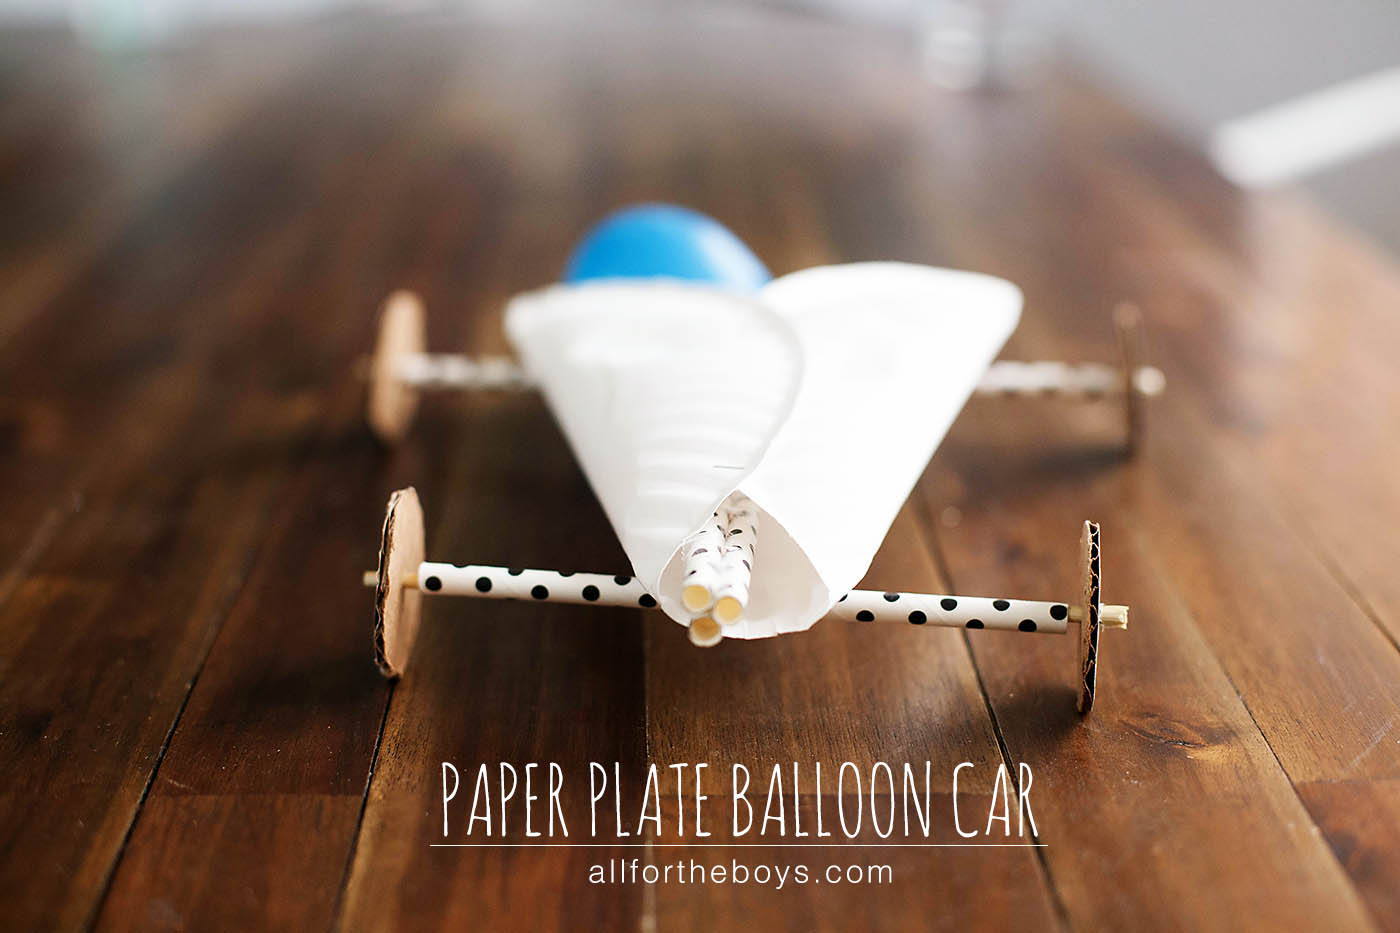 Paper plate balloon car